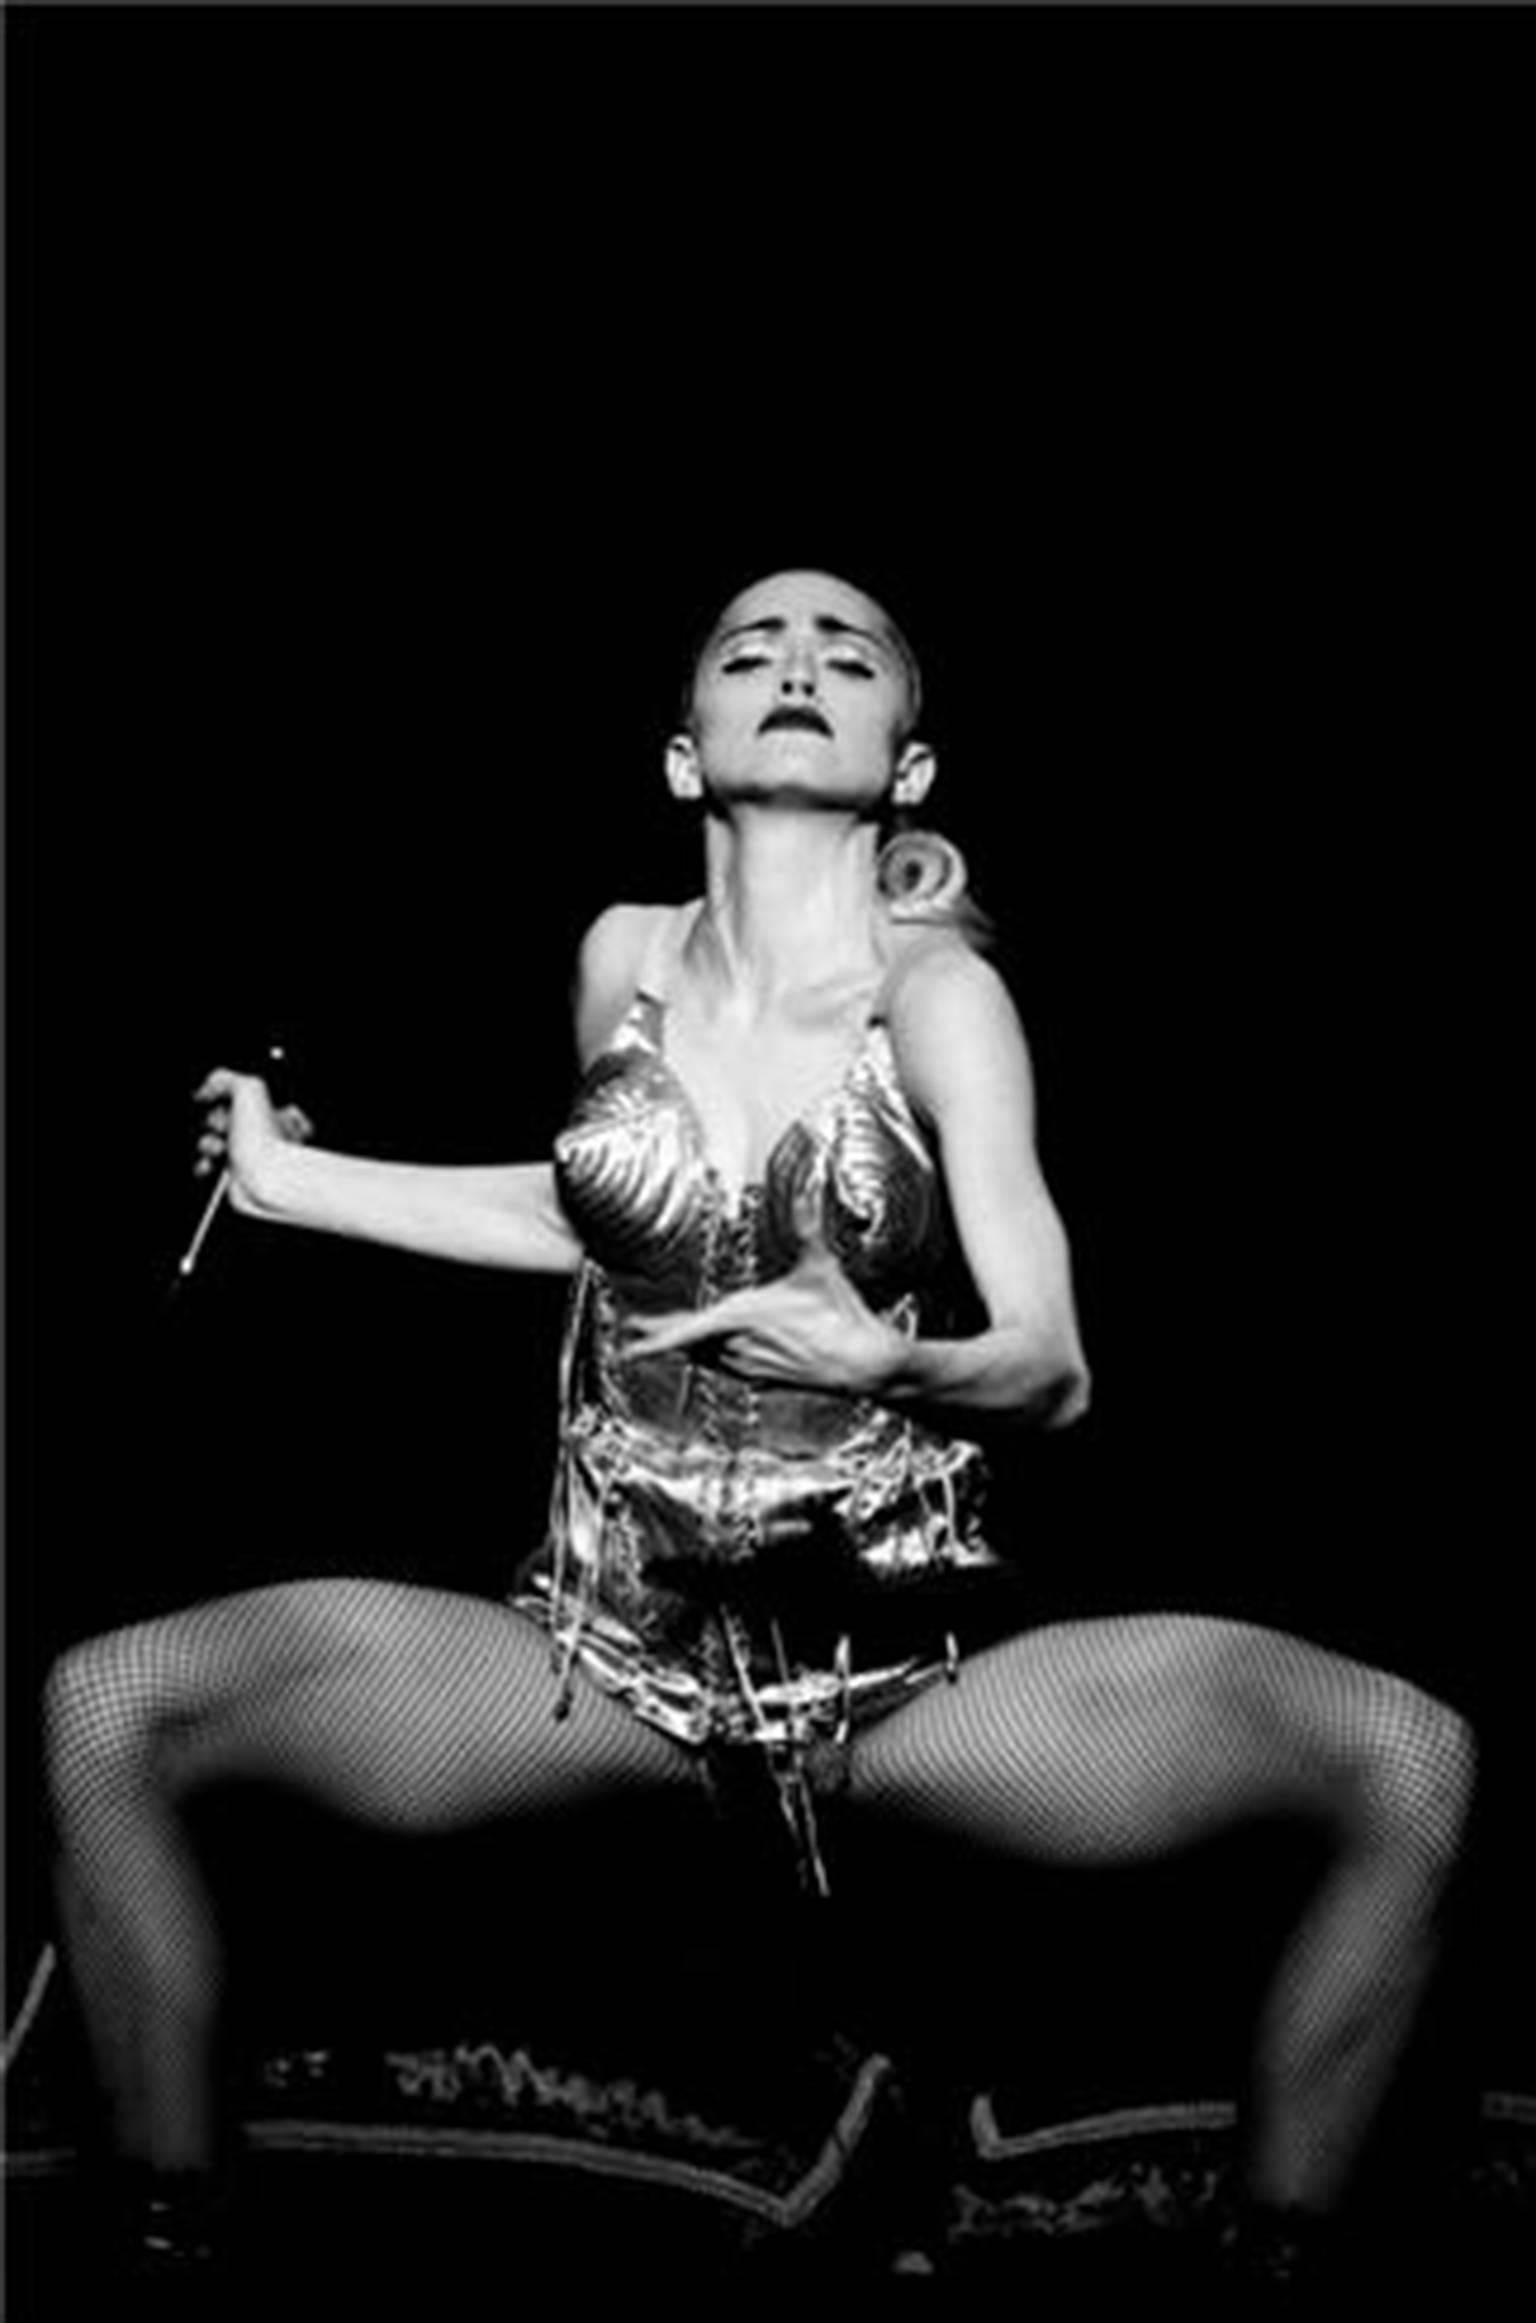 Neal Preston Black and White Photograph - Madonna, Tokyo, Japan 1990